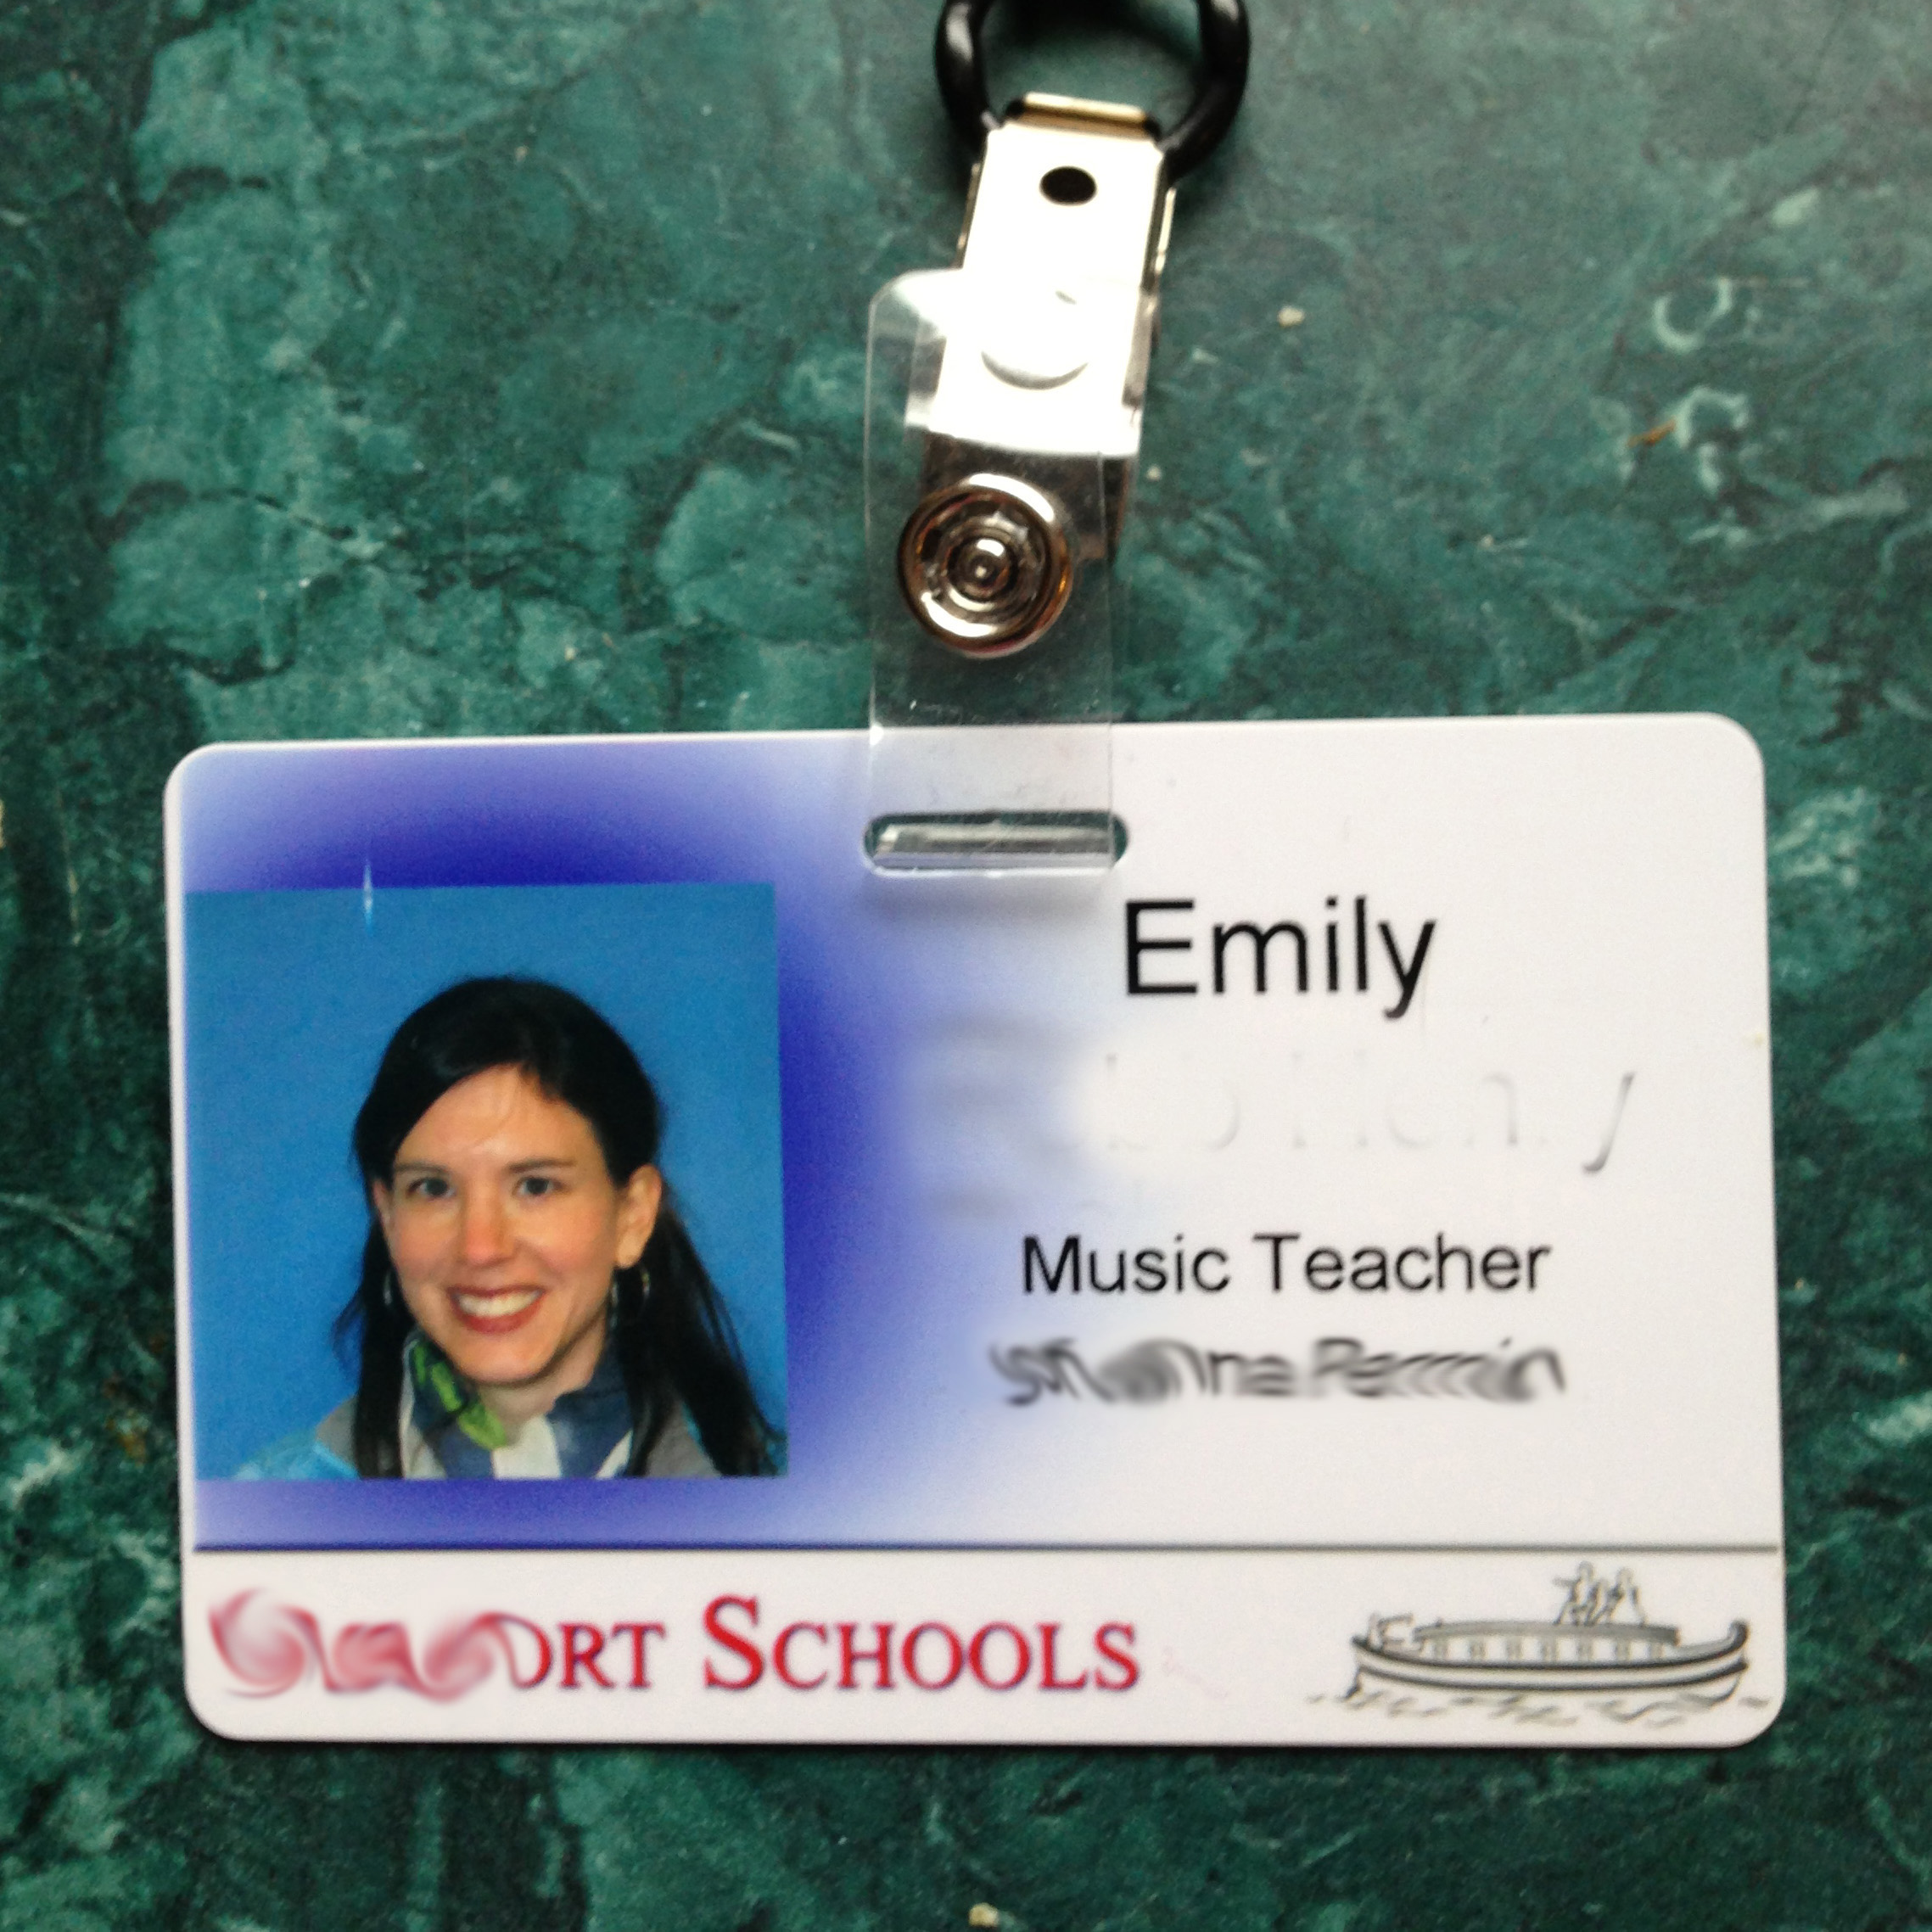 Teacher php. Teacher ID Card. ID badge. Круглый бейджик дизайн. Бадж для учителей.